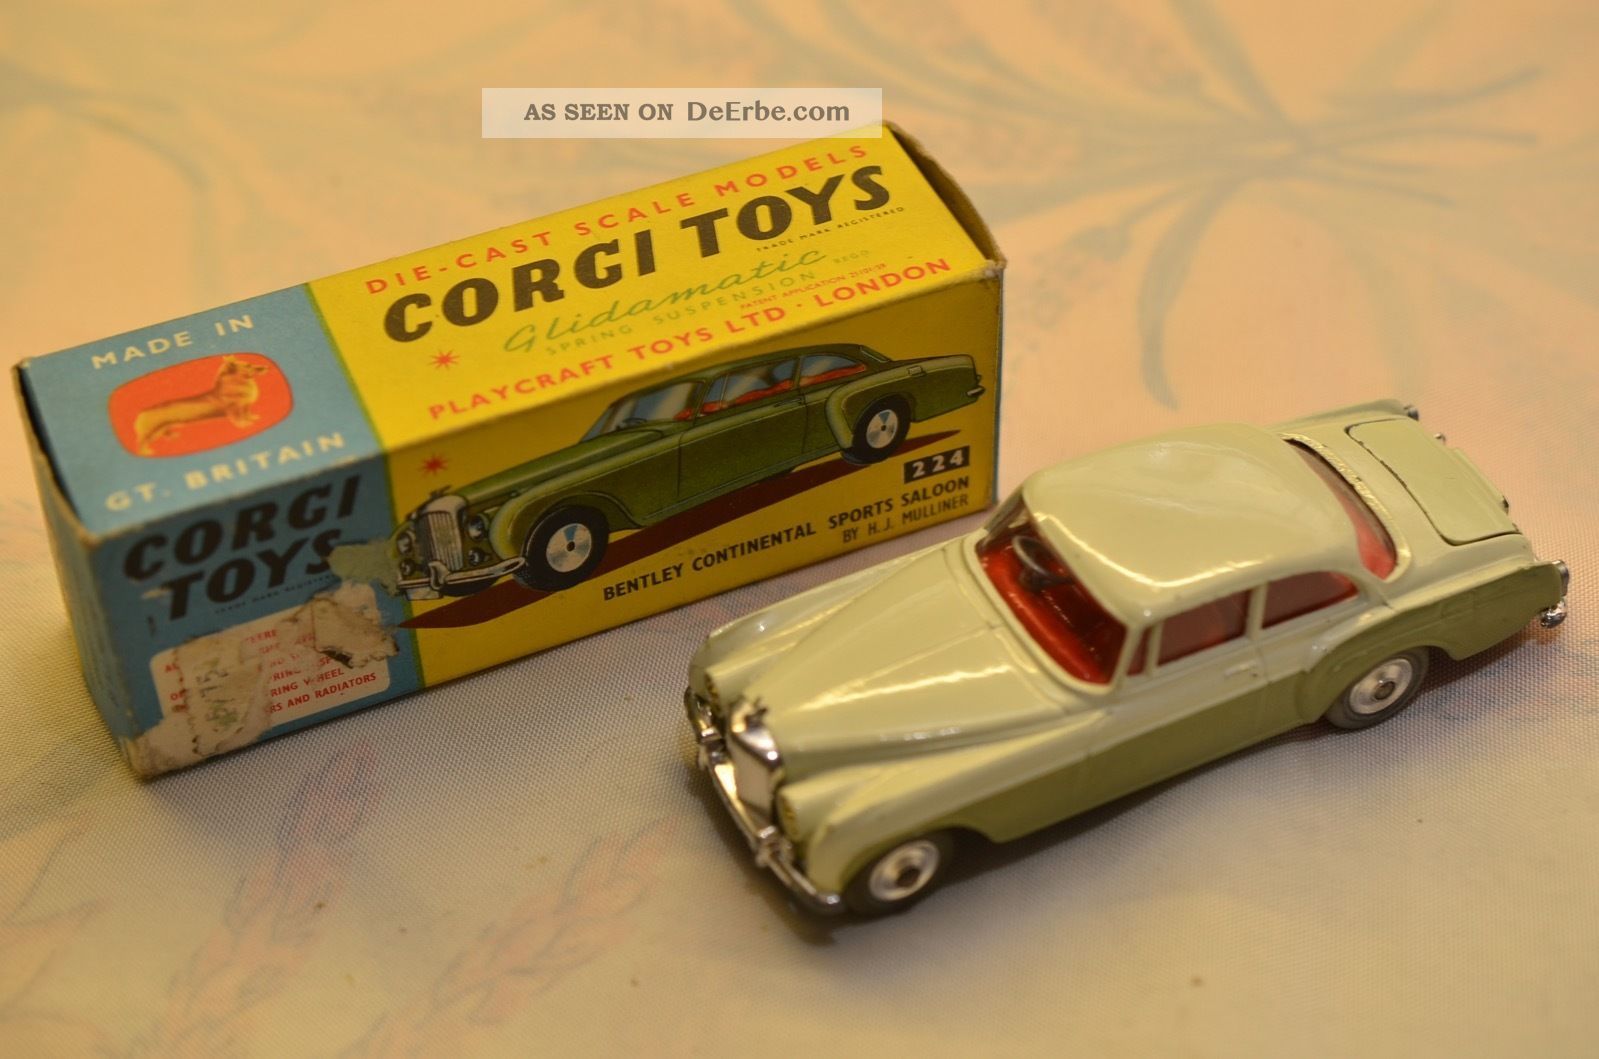 Sammlerstück Corgi Toys 224 Bentley Continental Fahrzeuge Bild